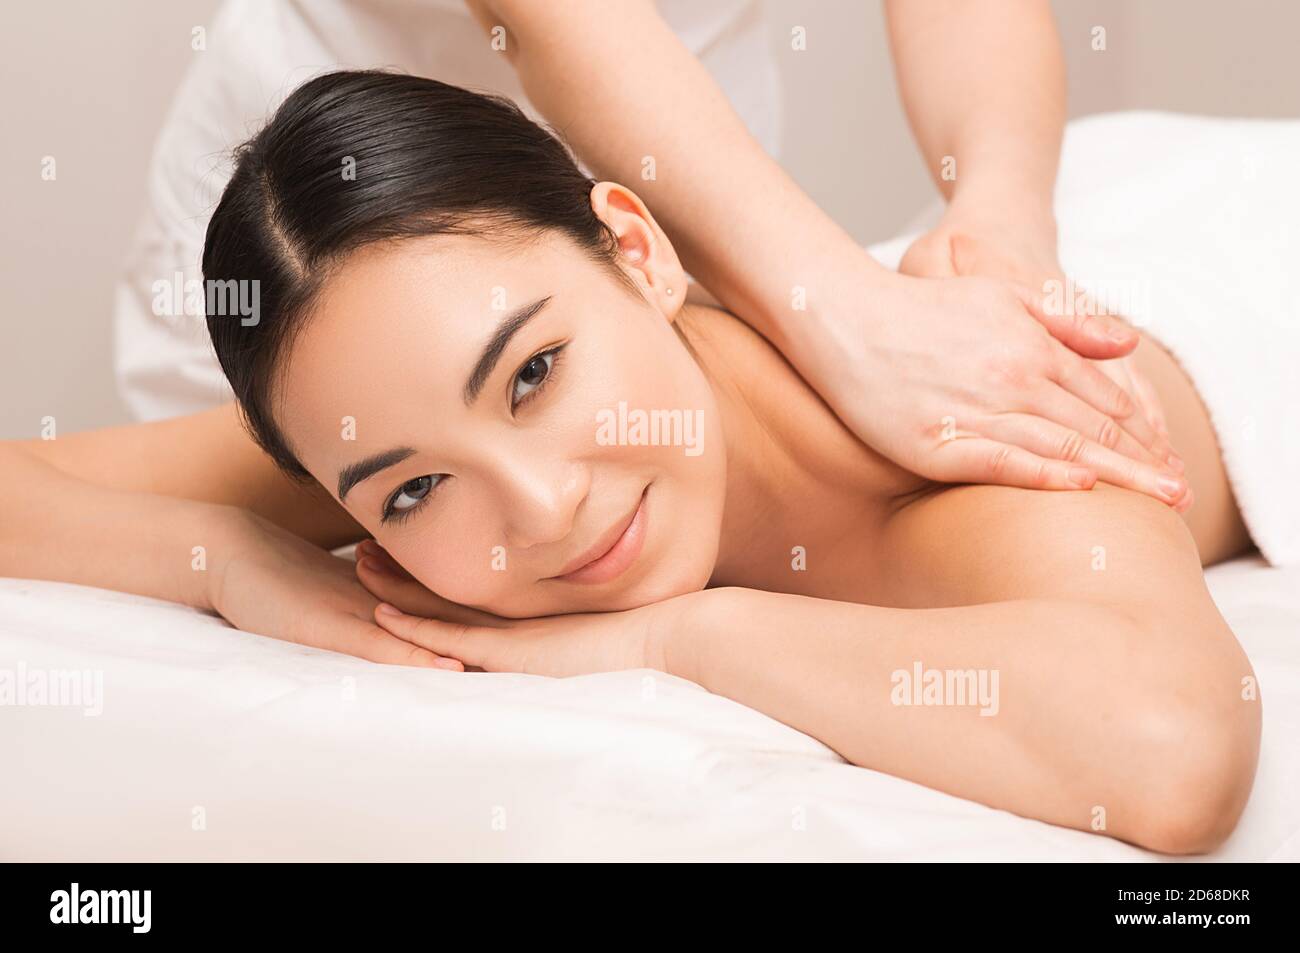 Thai massage therapy. Portrait asian woman enjoying massage at the spa. Stock Photo